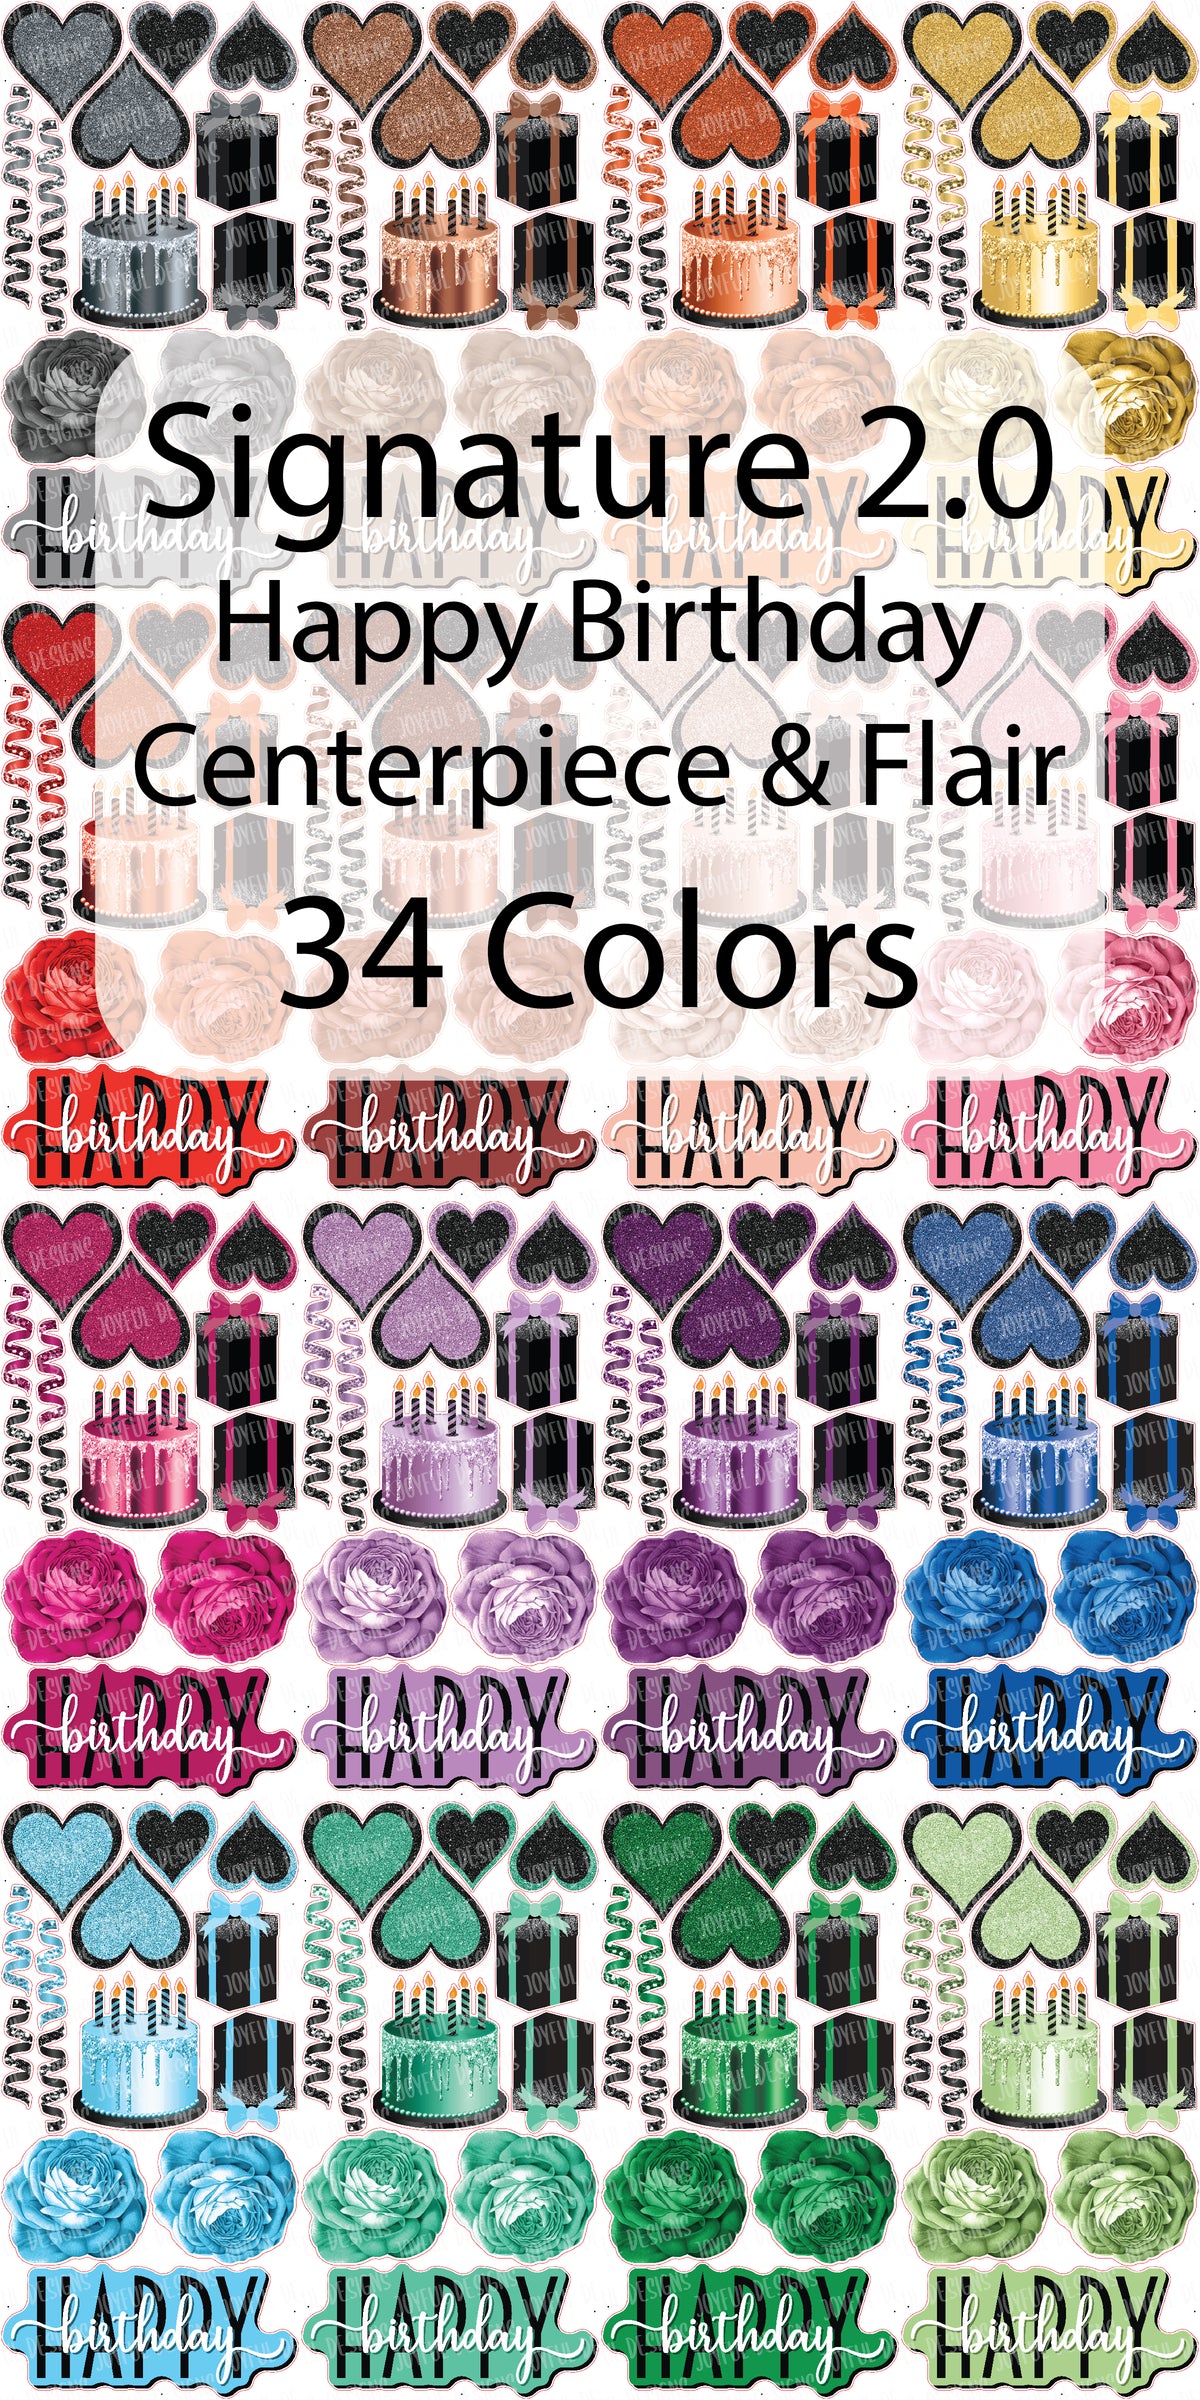 Signature 2.0 Happy Birthday Centerpiece & Flair Set- 34 Color Options!